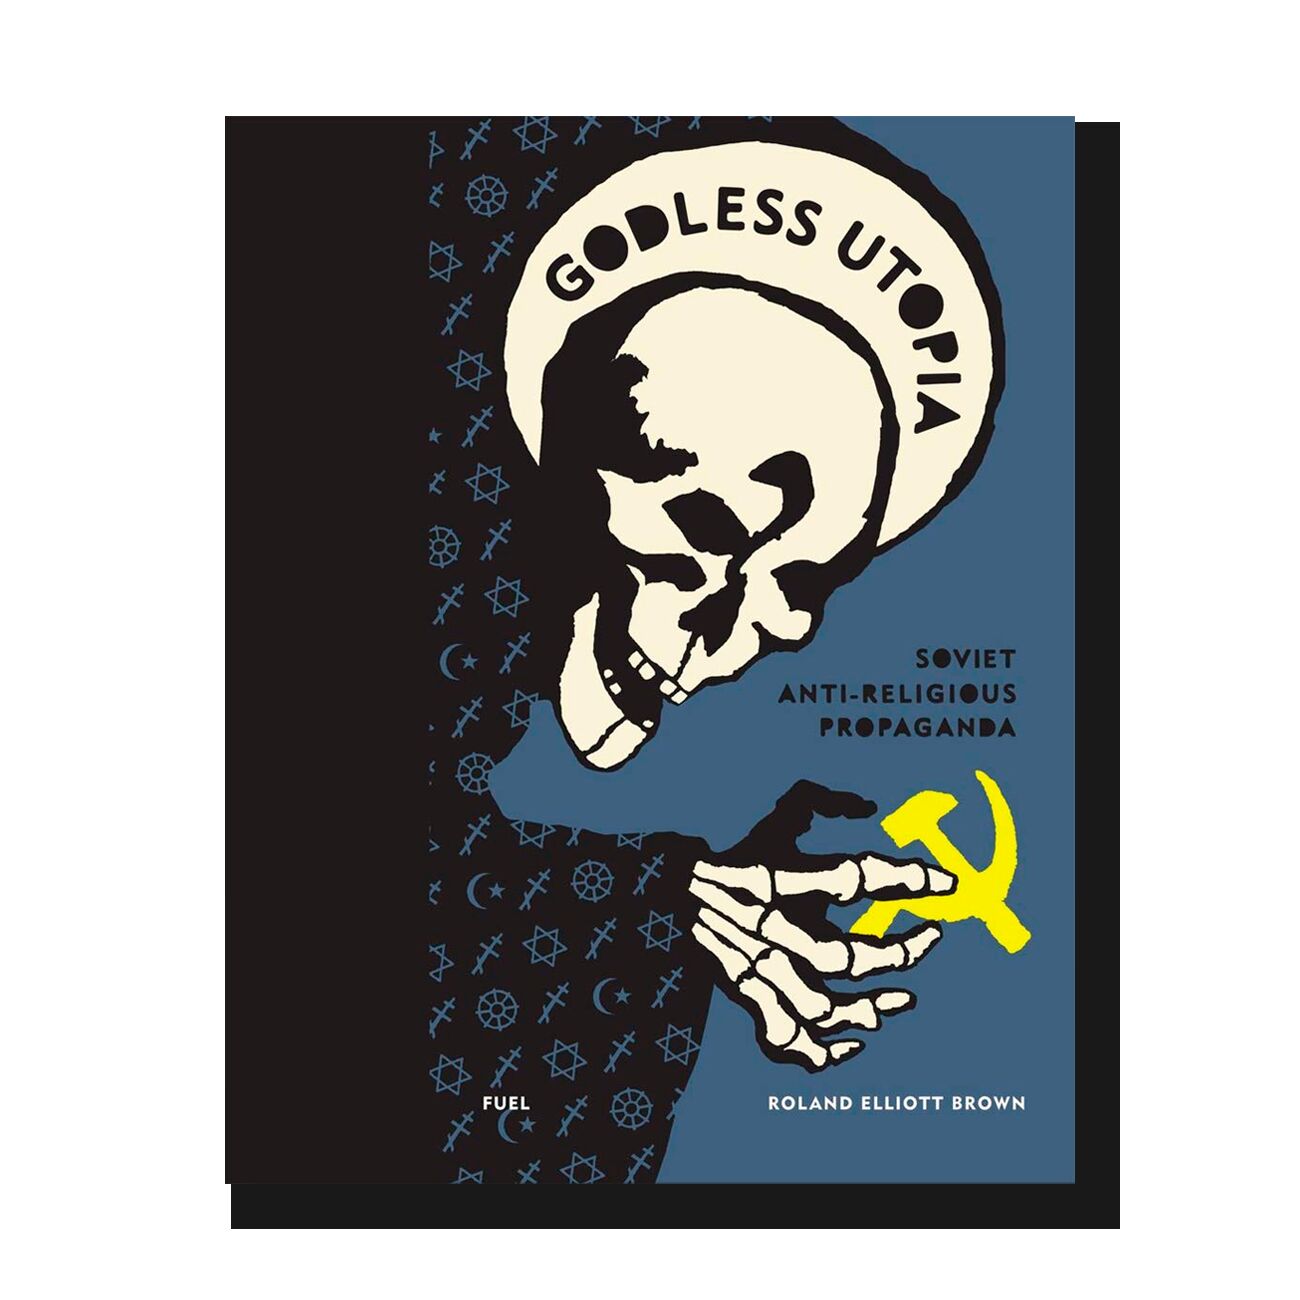 Godless Utopia: Soviet Anti-Religious Propaganda